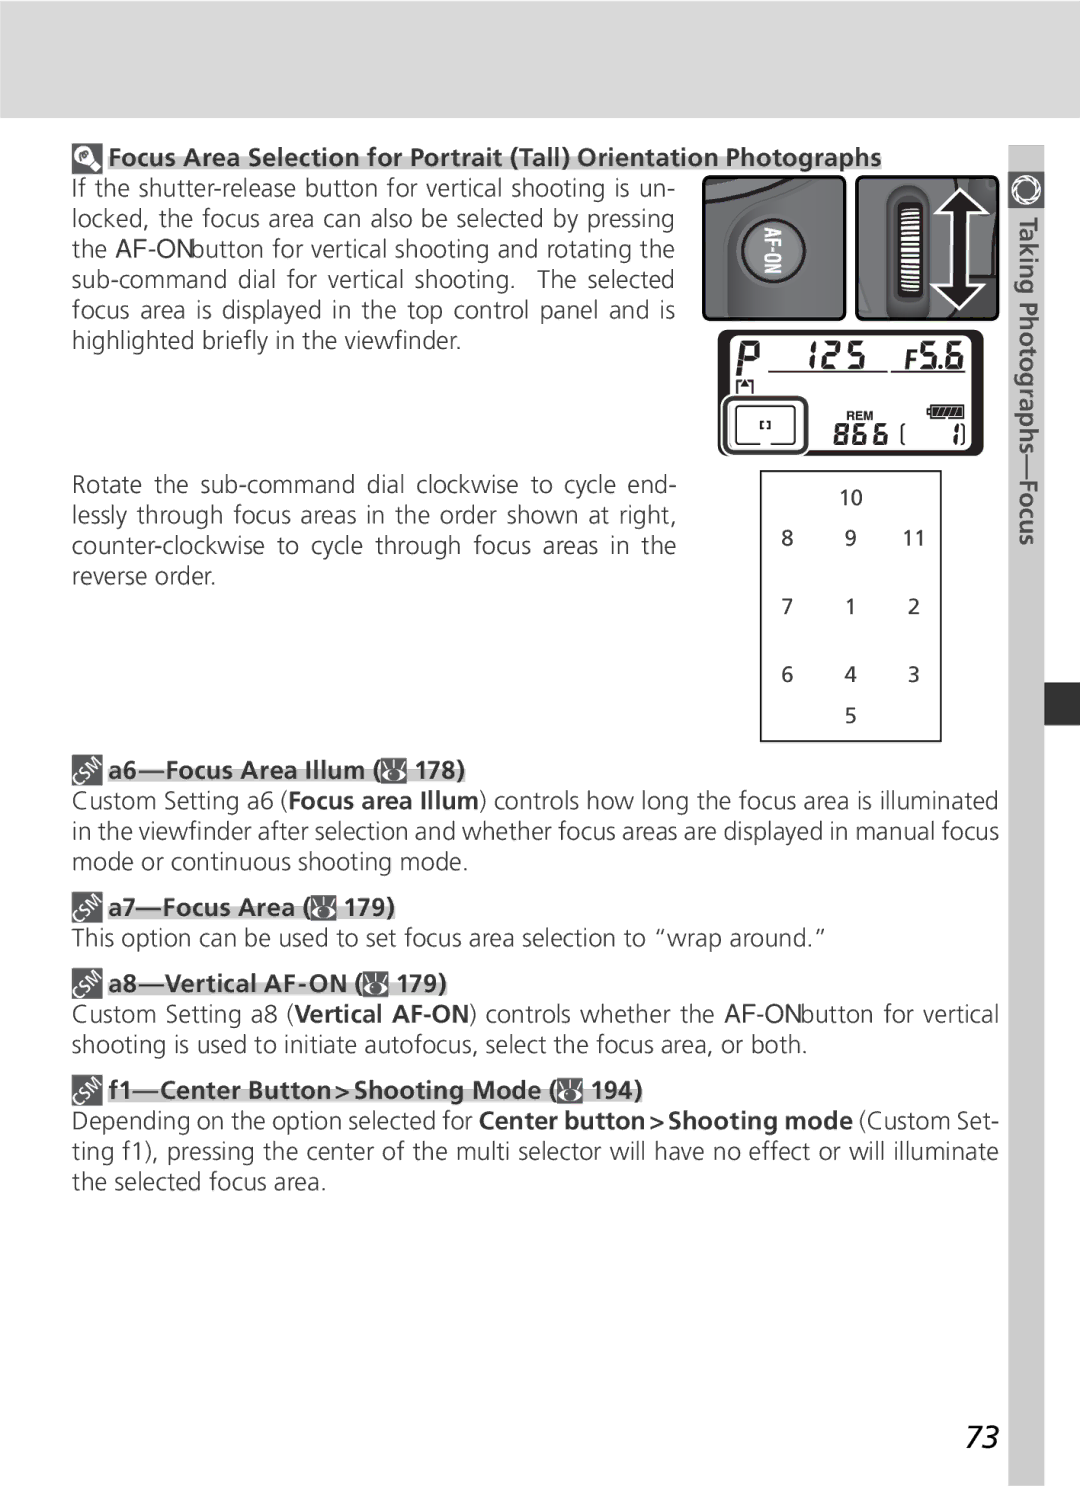 Nikon D2Hs manual A6-Focus Area Illum, A7-Focus Area, F1-Center Button Shooting Mode 